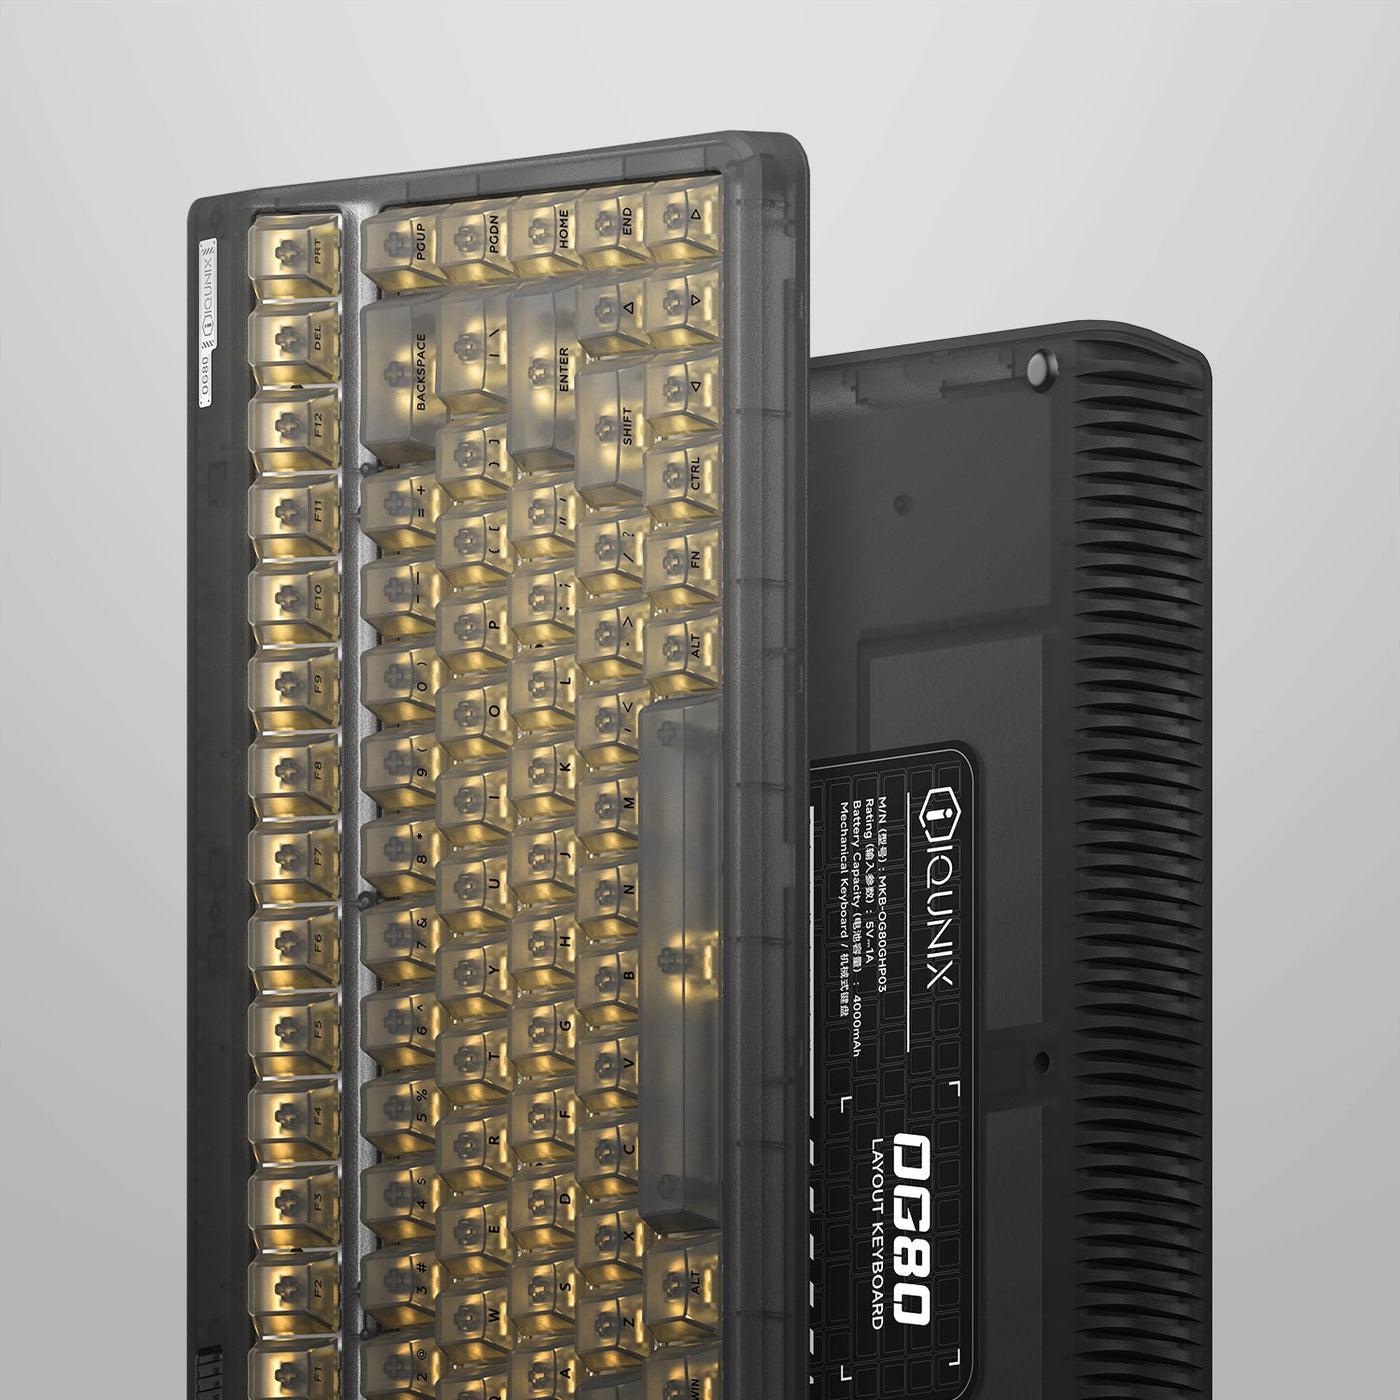 IQUNIX OG80 Dark Side Hot Swappable Wireless Mechanical Keyboard